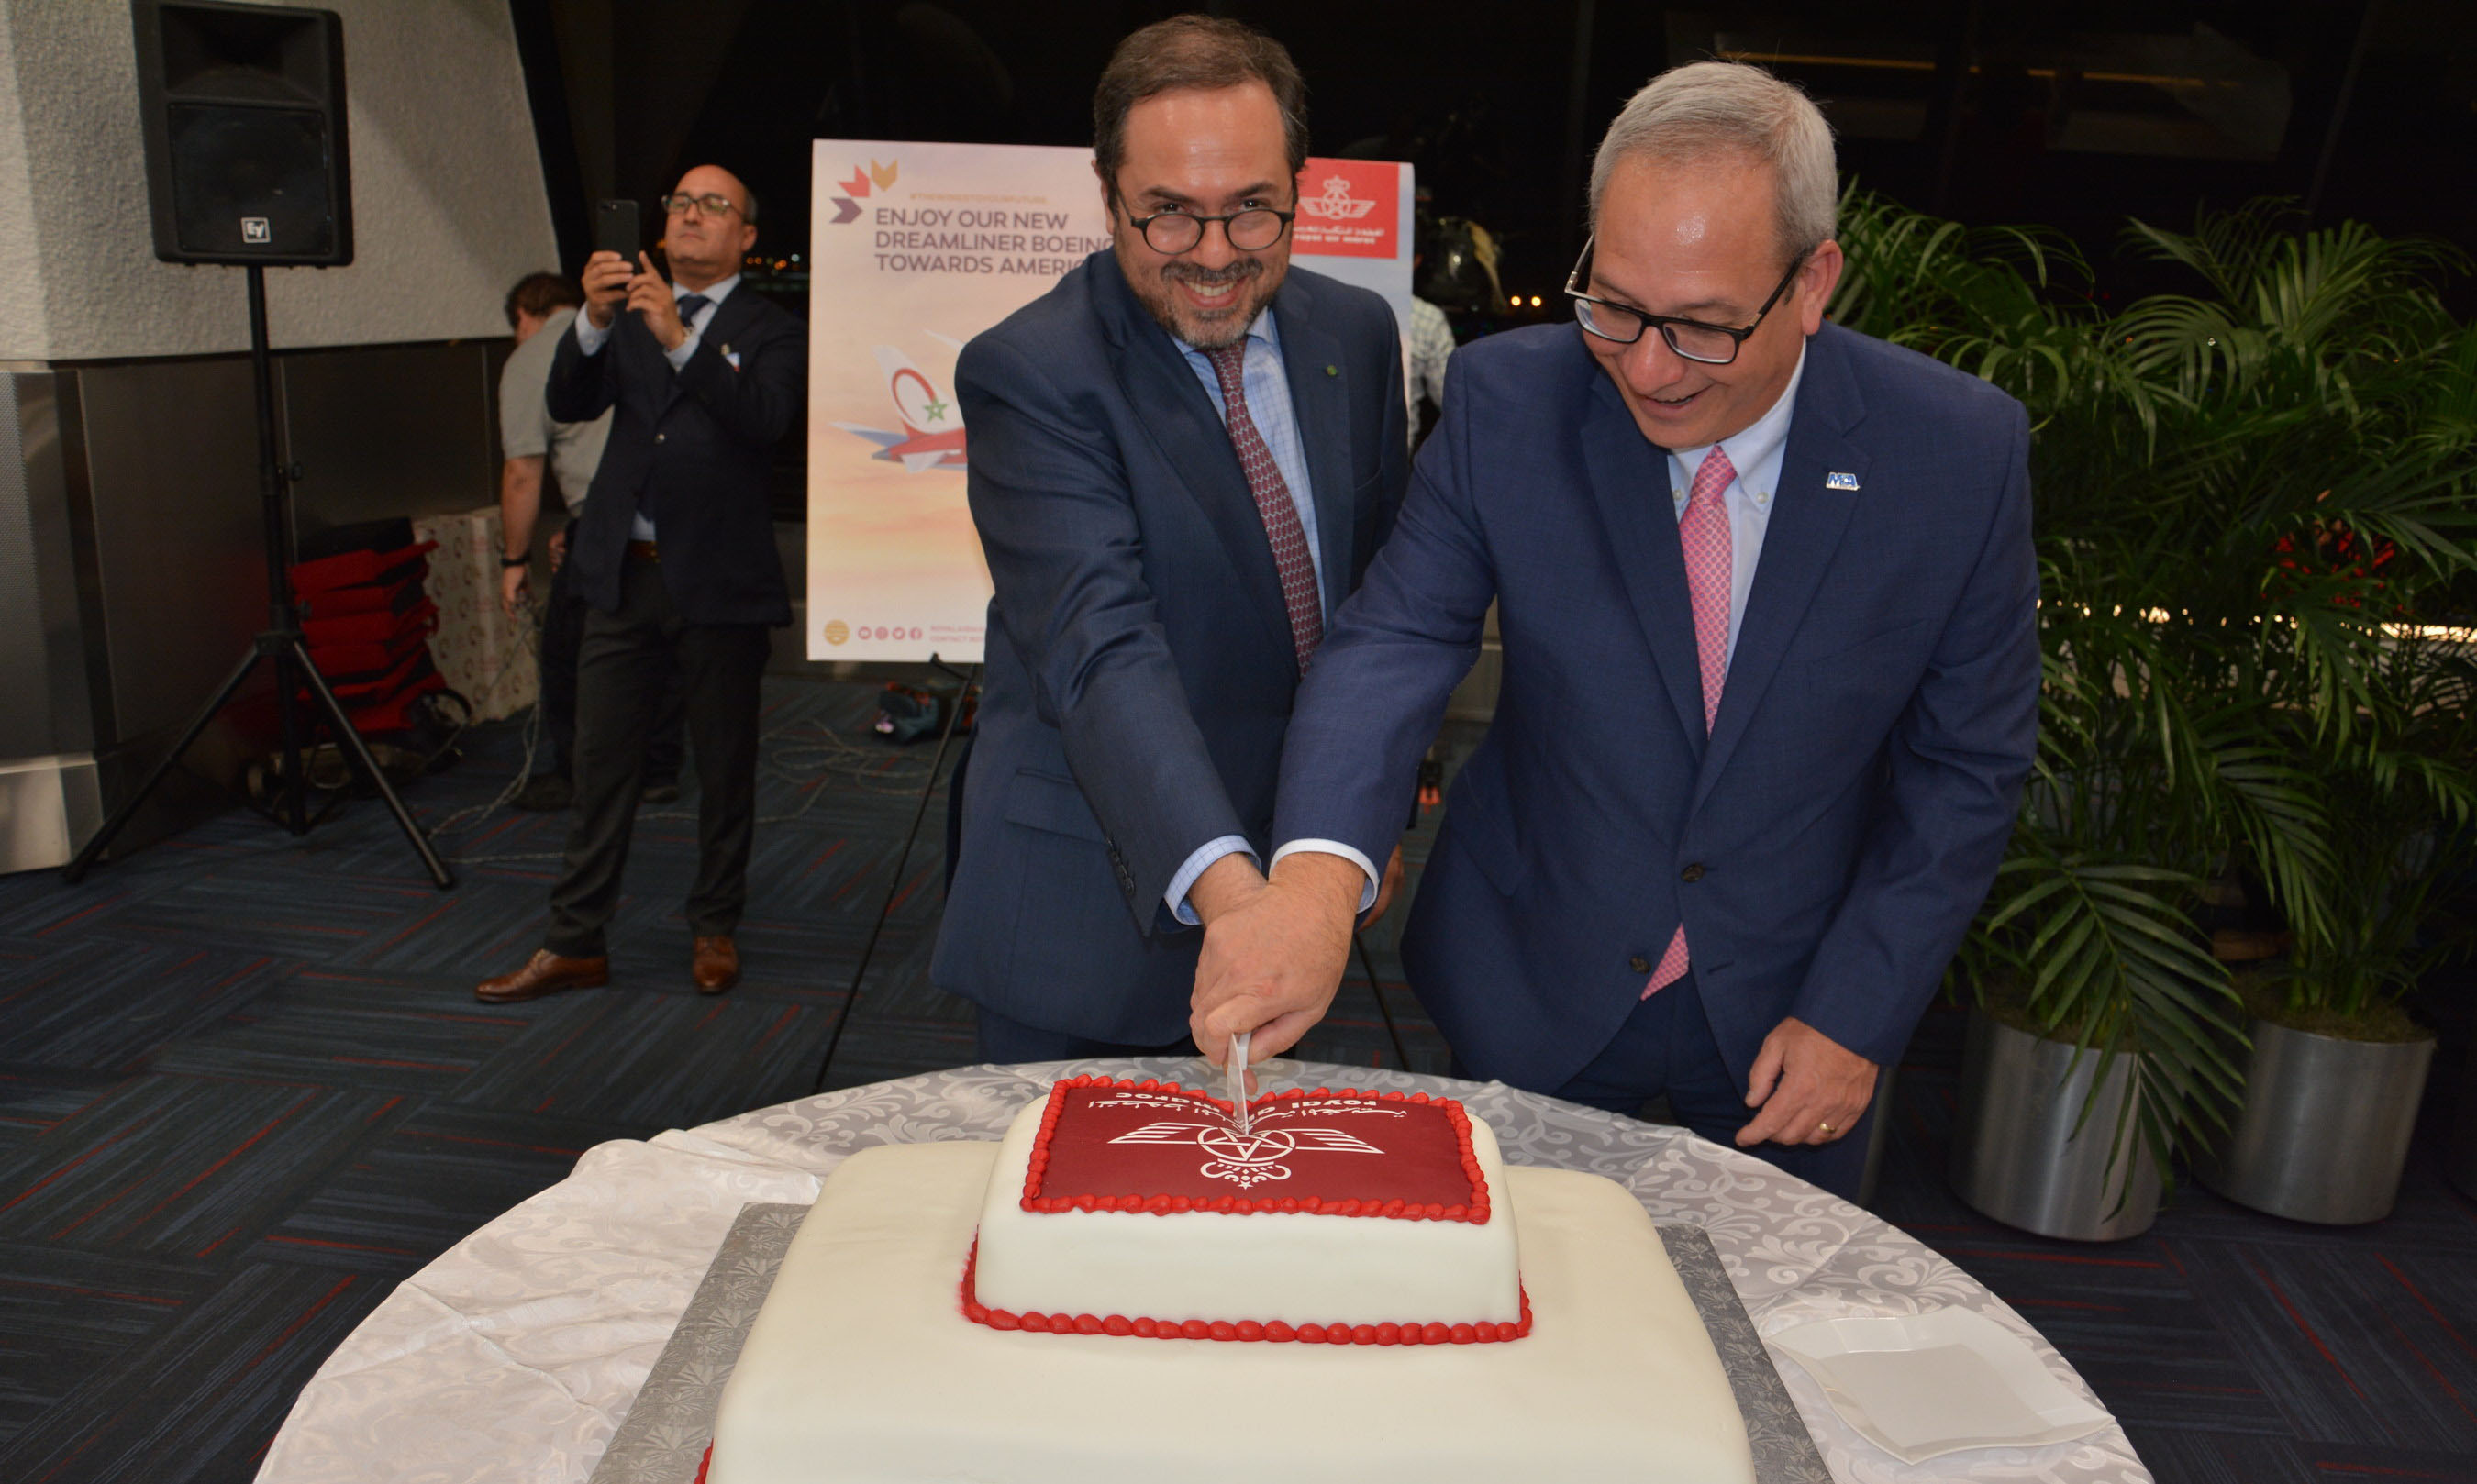 Royal Air Maroc celebrates Miami route